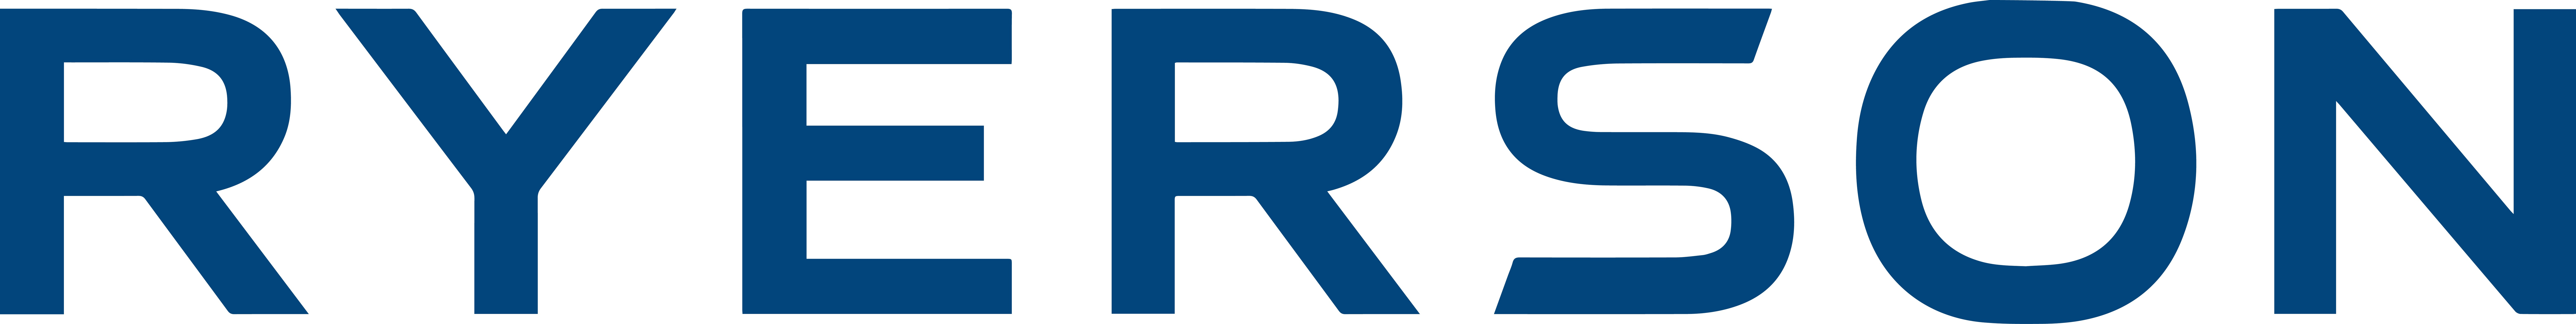 Ryerson blue logo